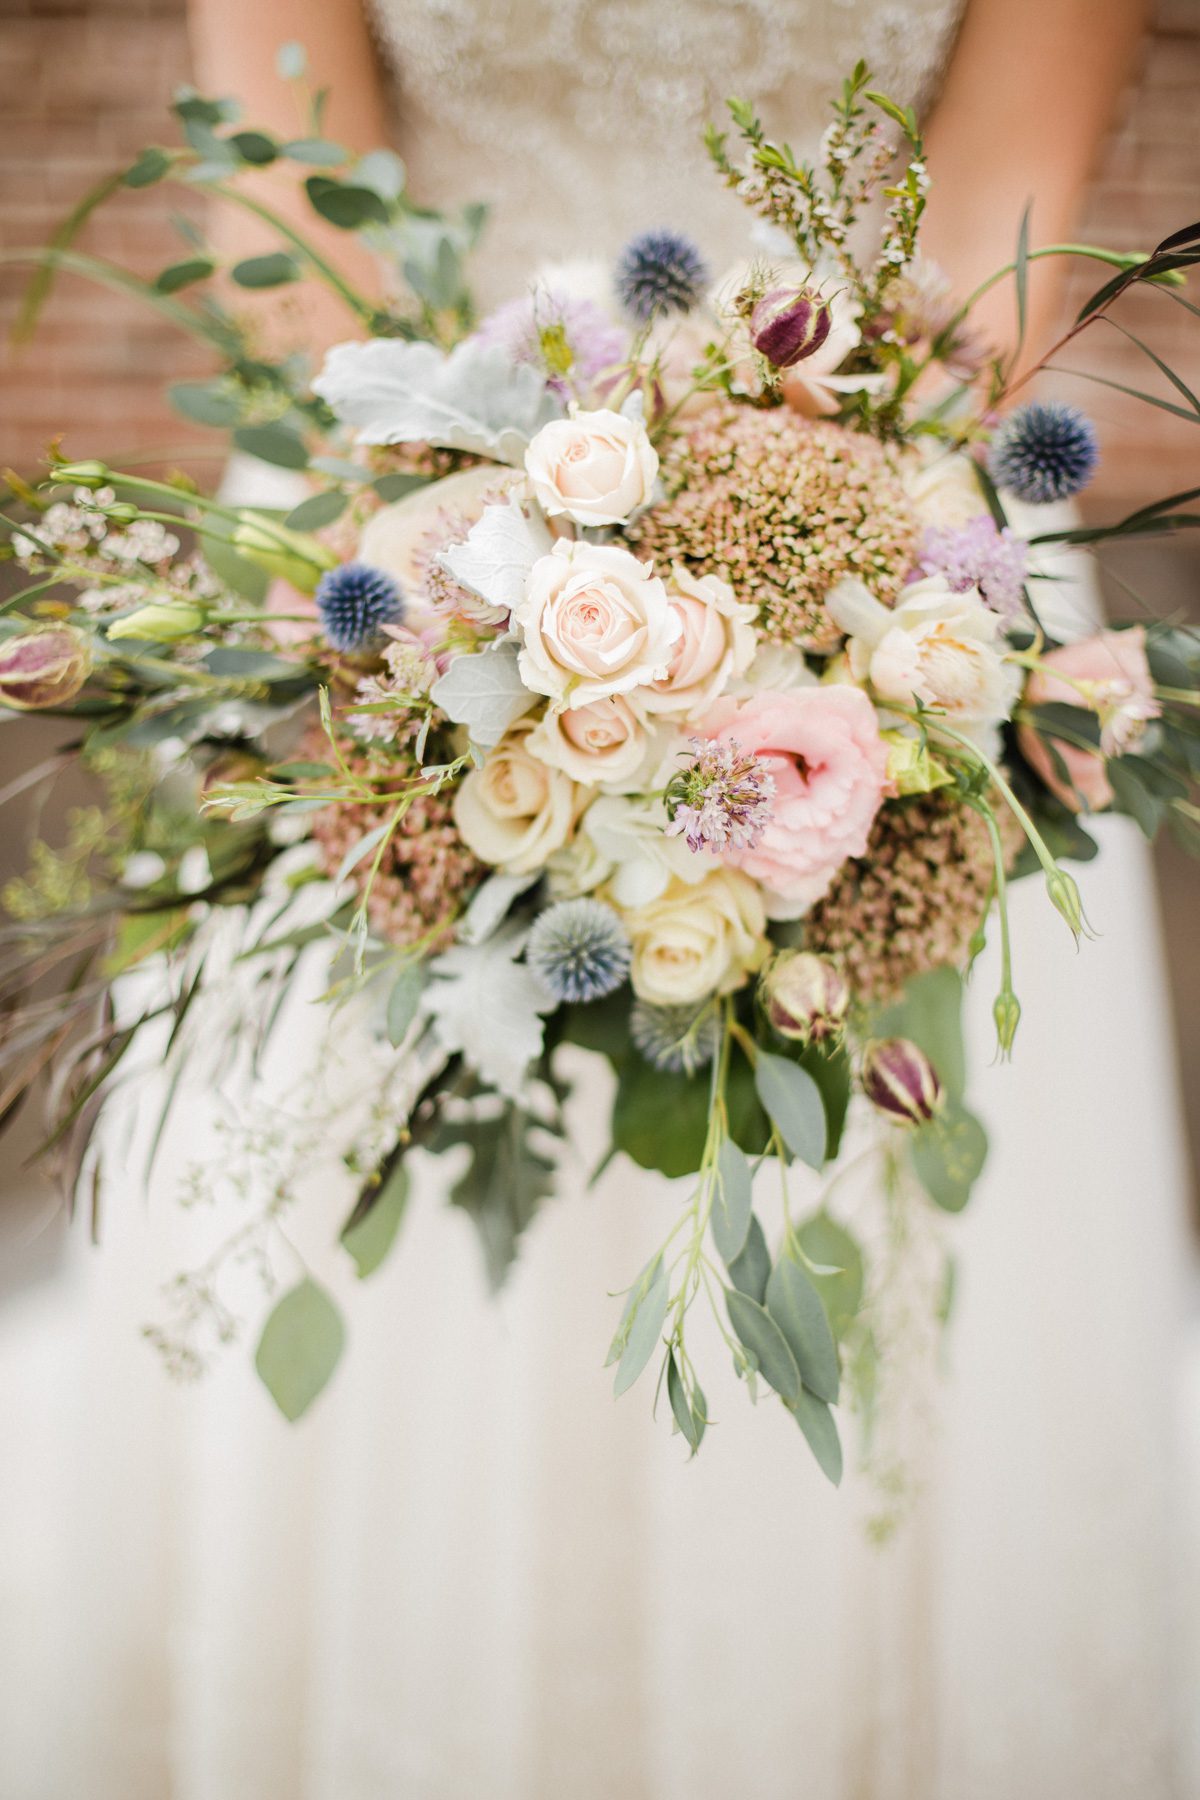 Romantic pastel bridal bouquet with roses, lisianthus